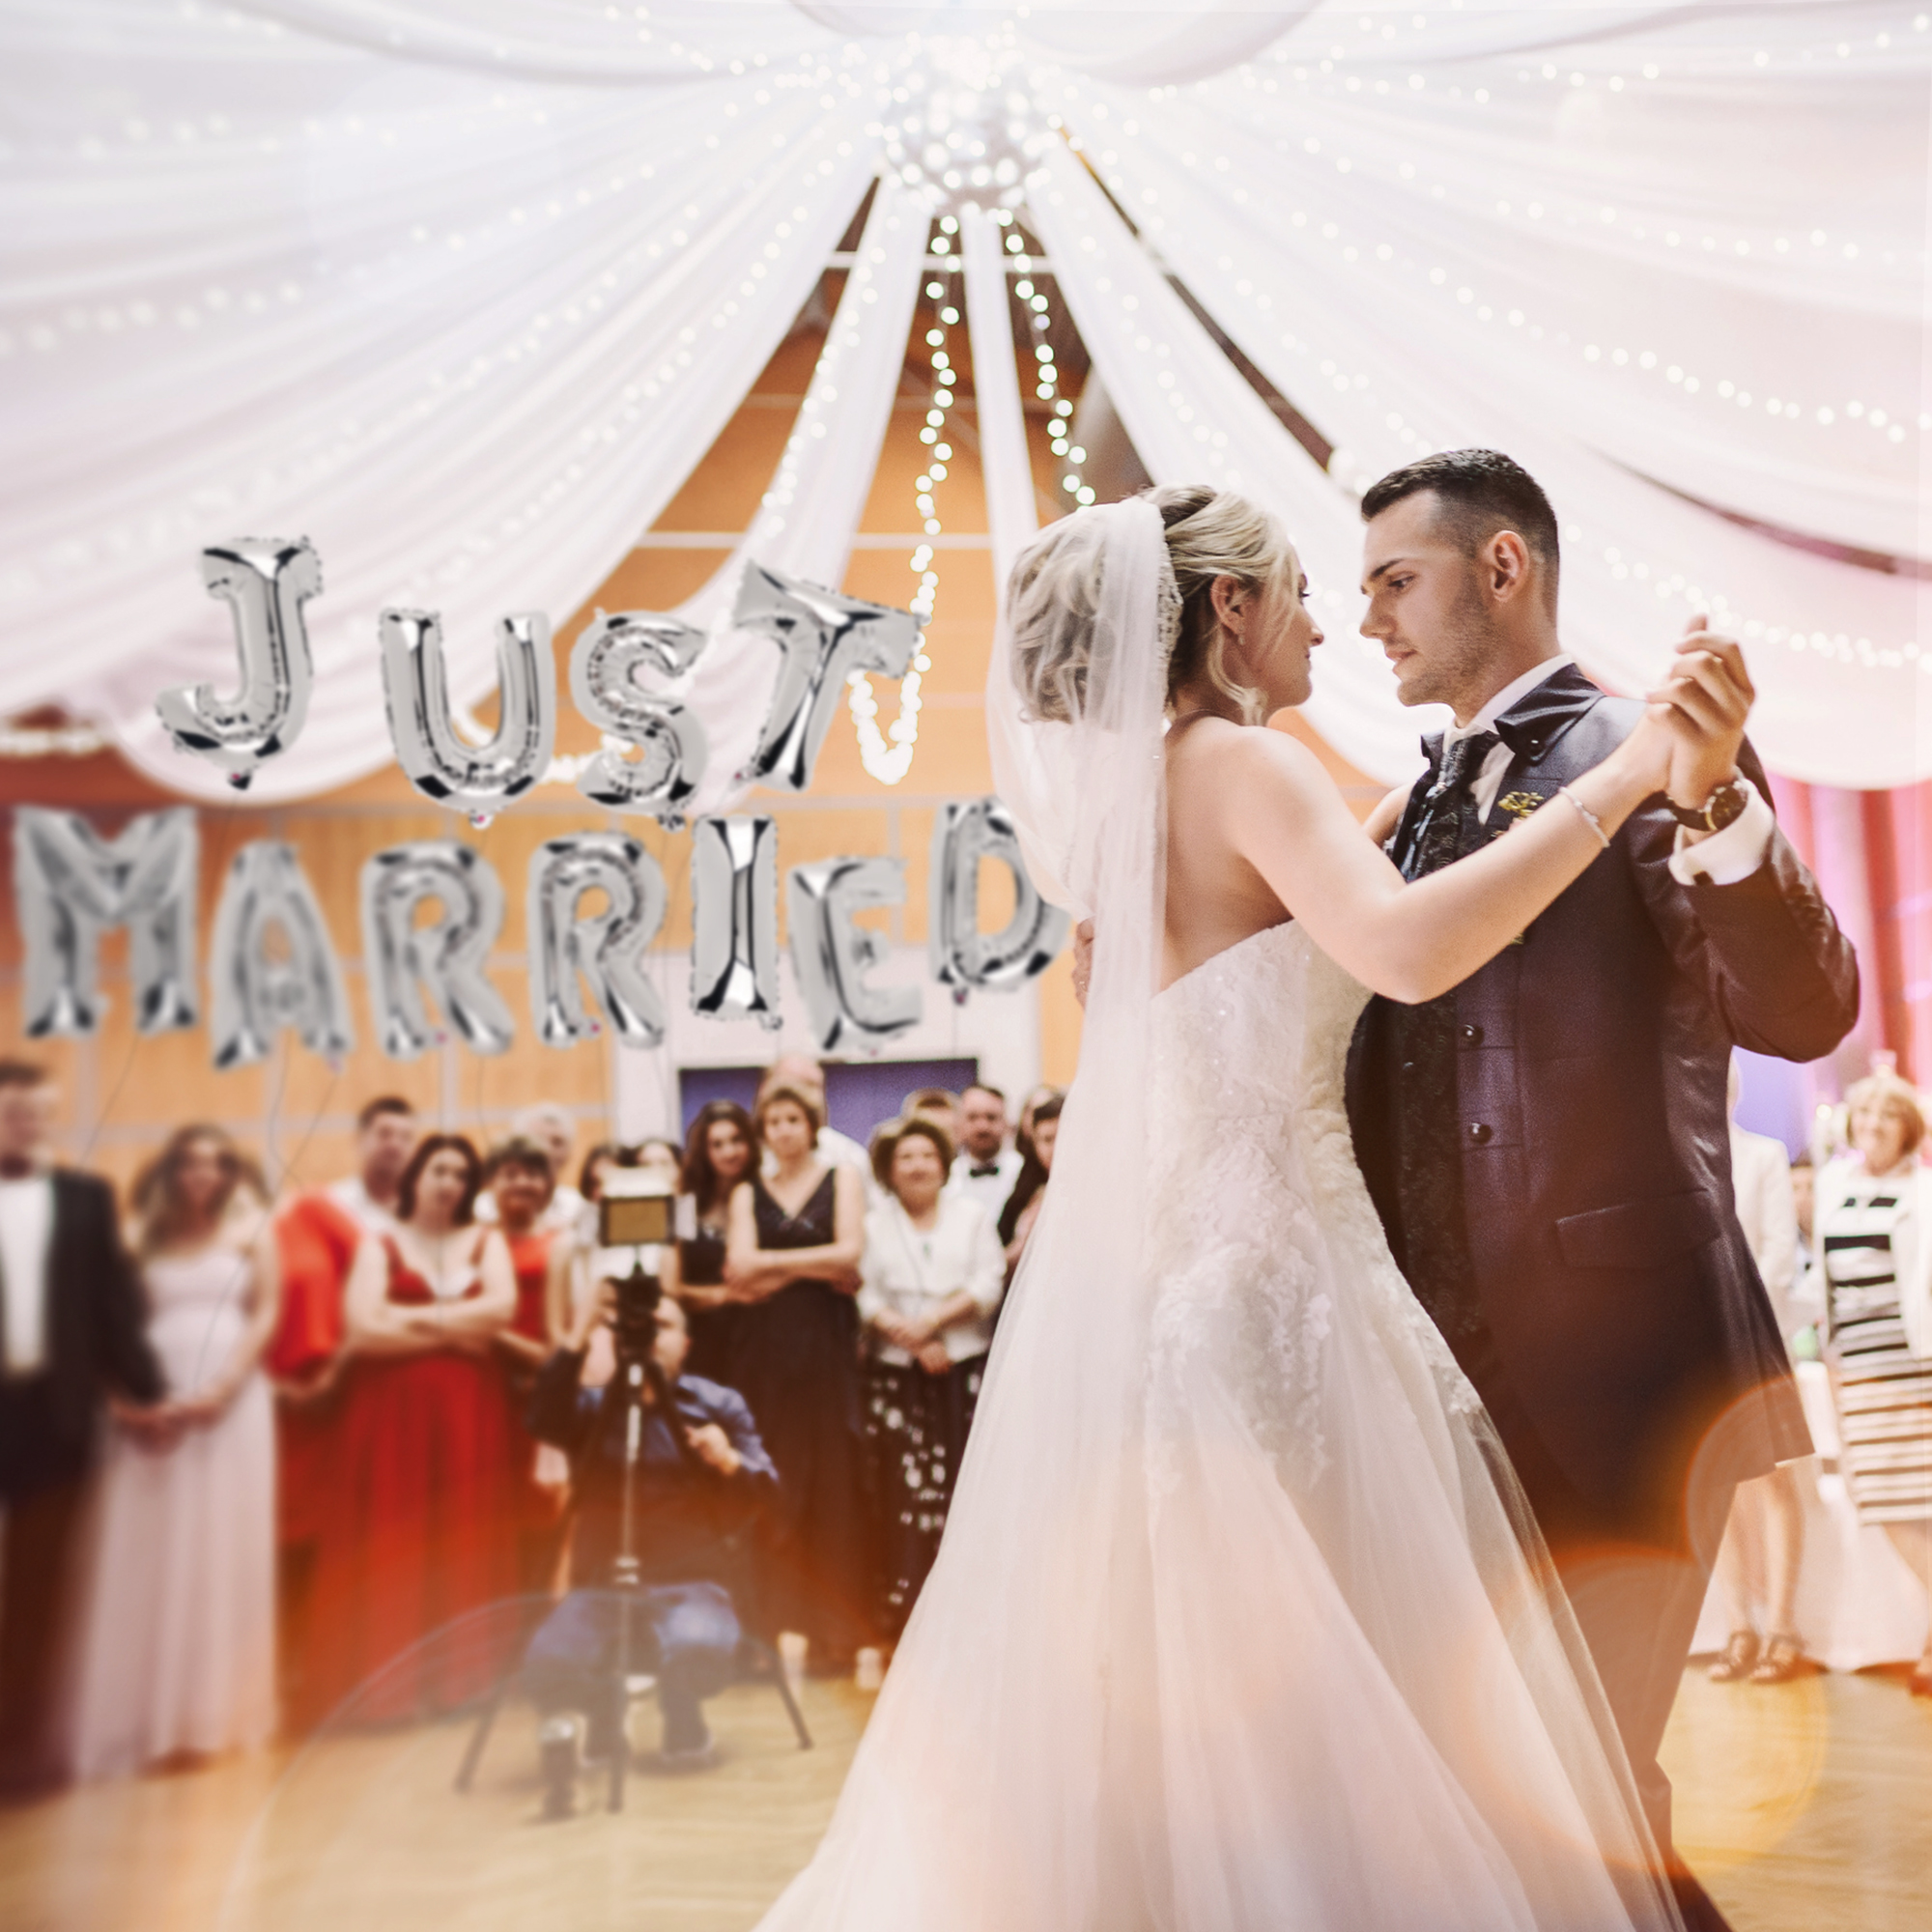 Hochzeitsballons - Just Married 3836 - 2